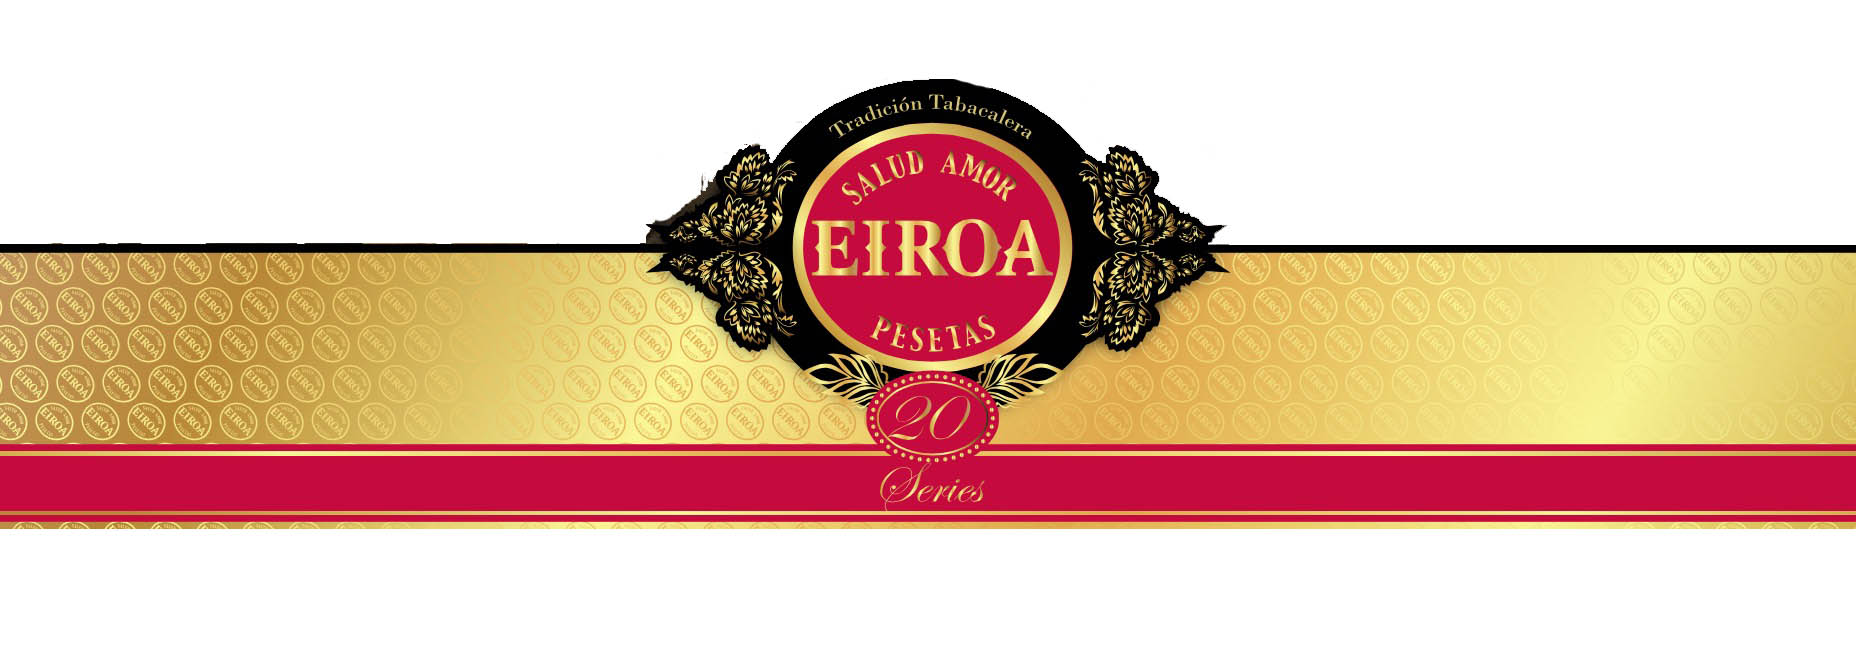 Eiroa The First 20